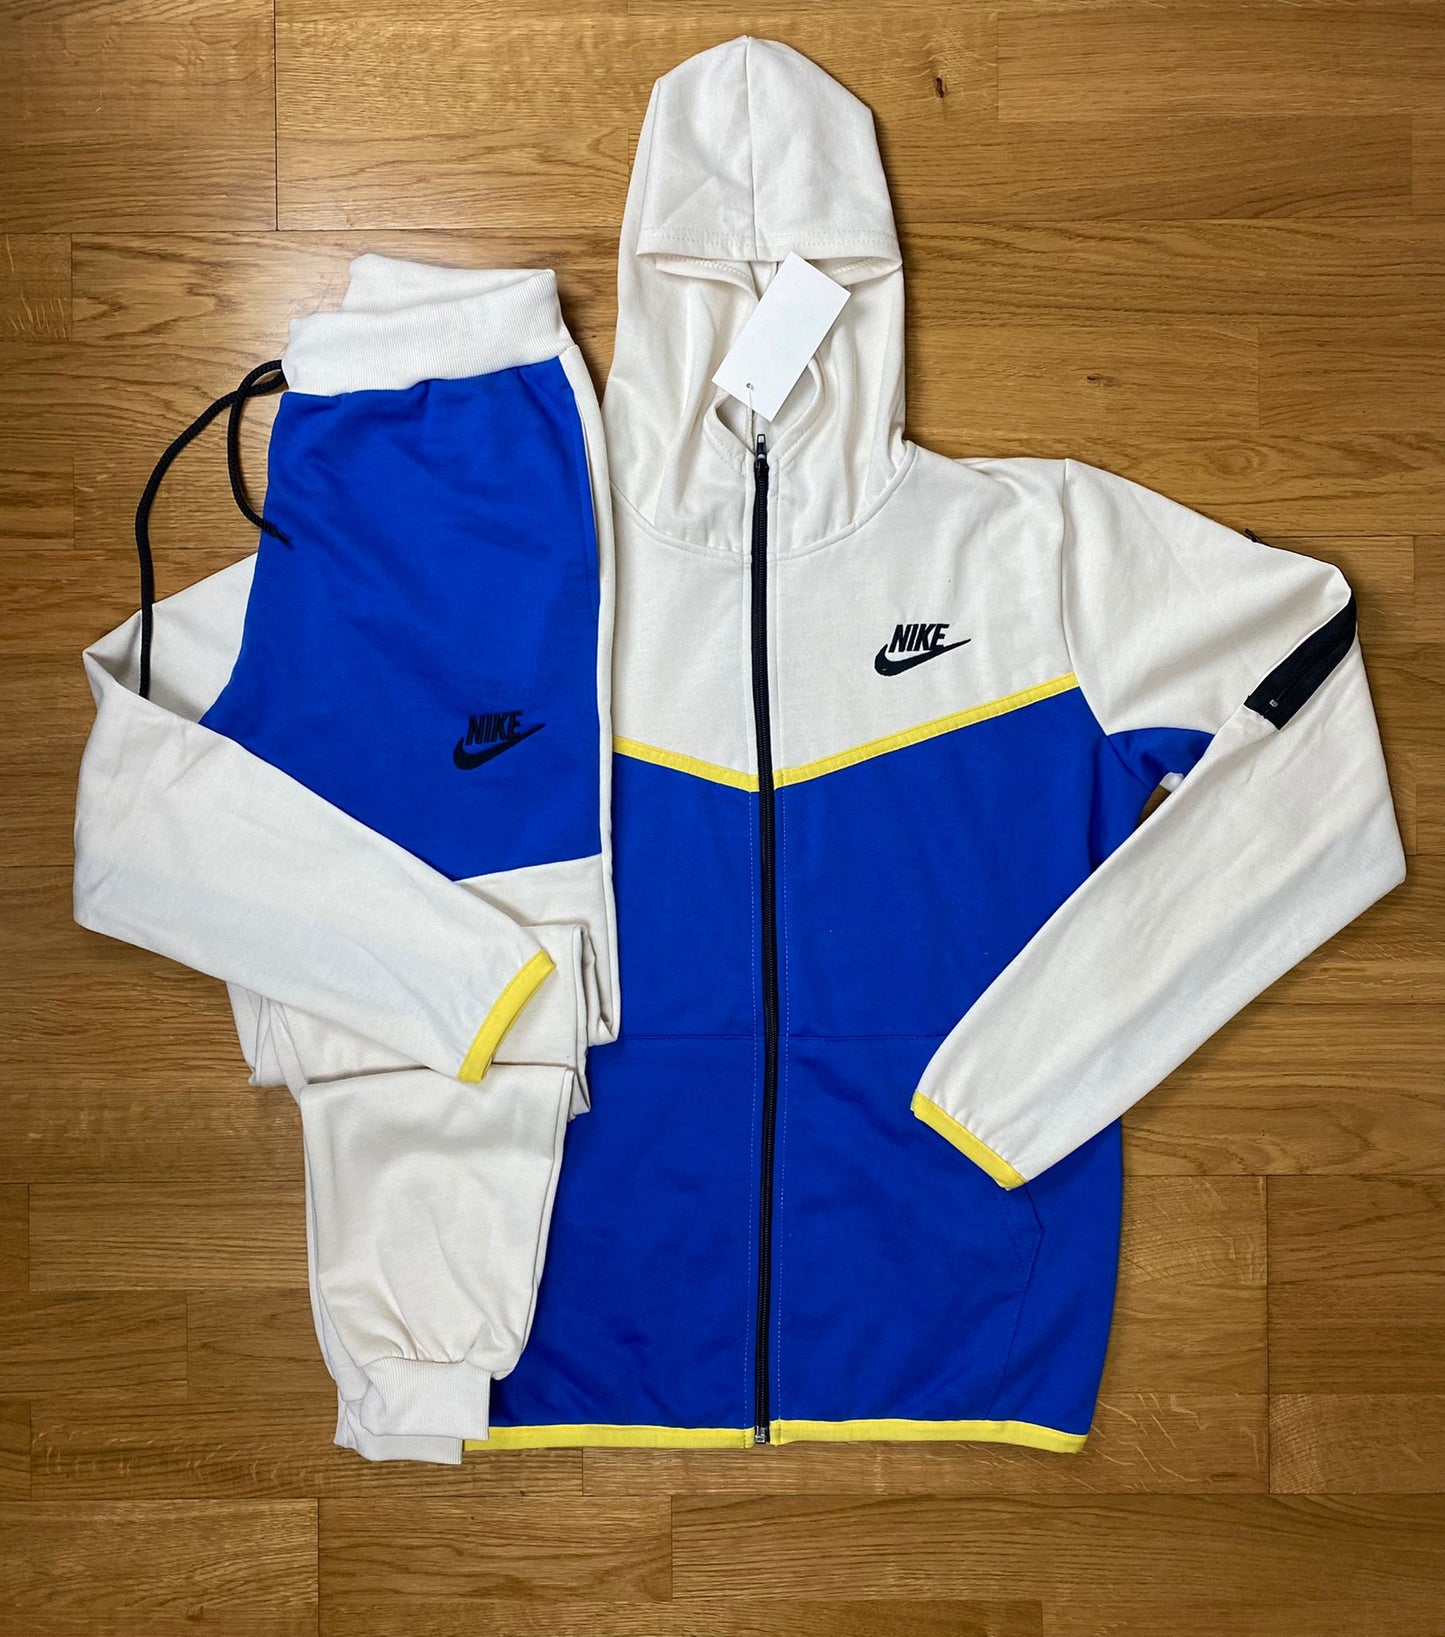 Chandal Nike Azul y blanco